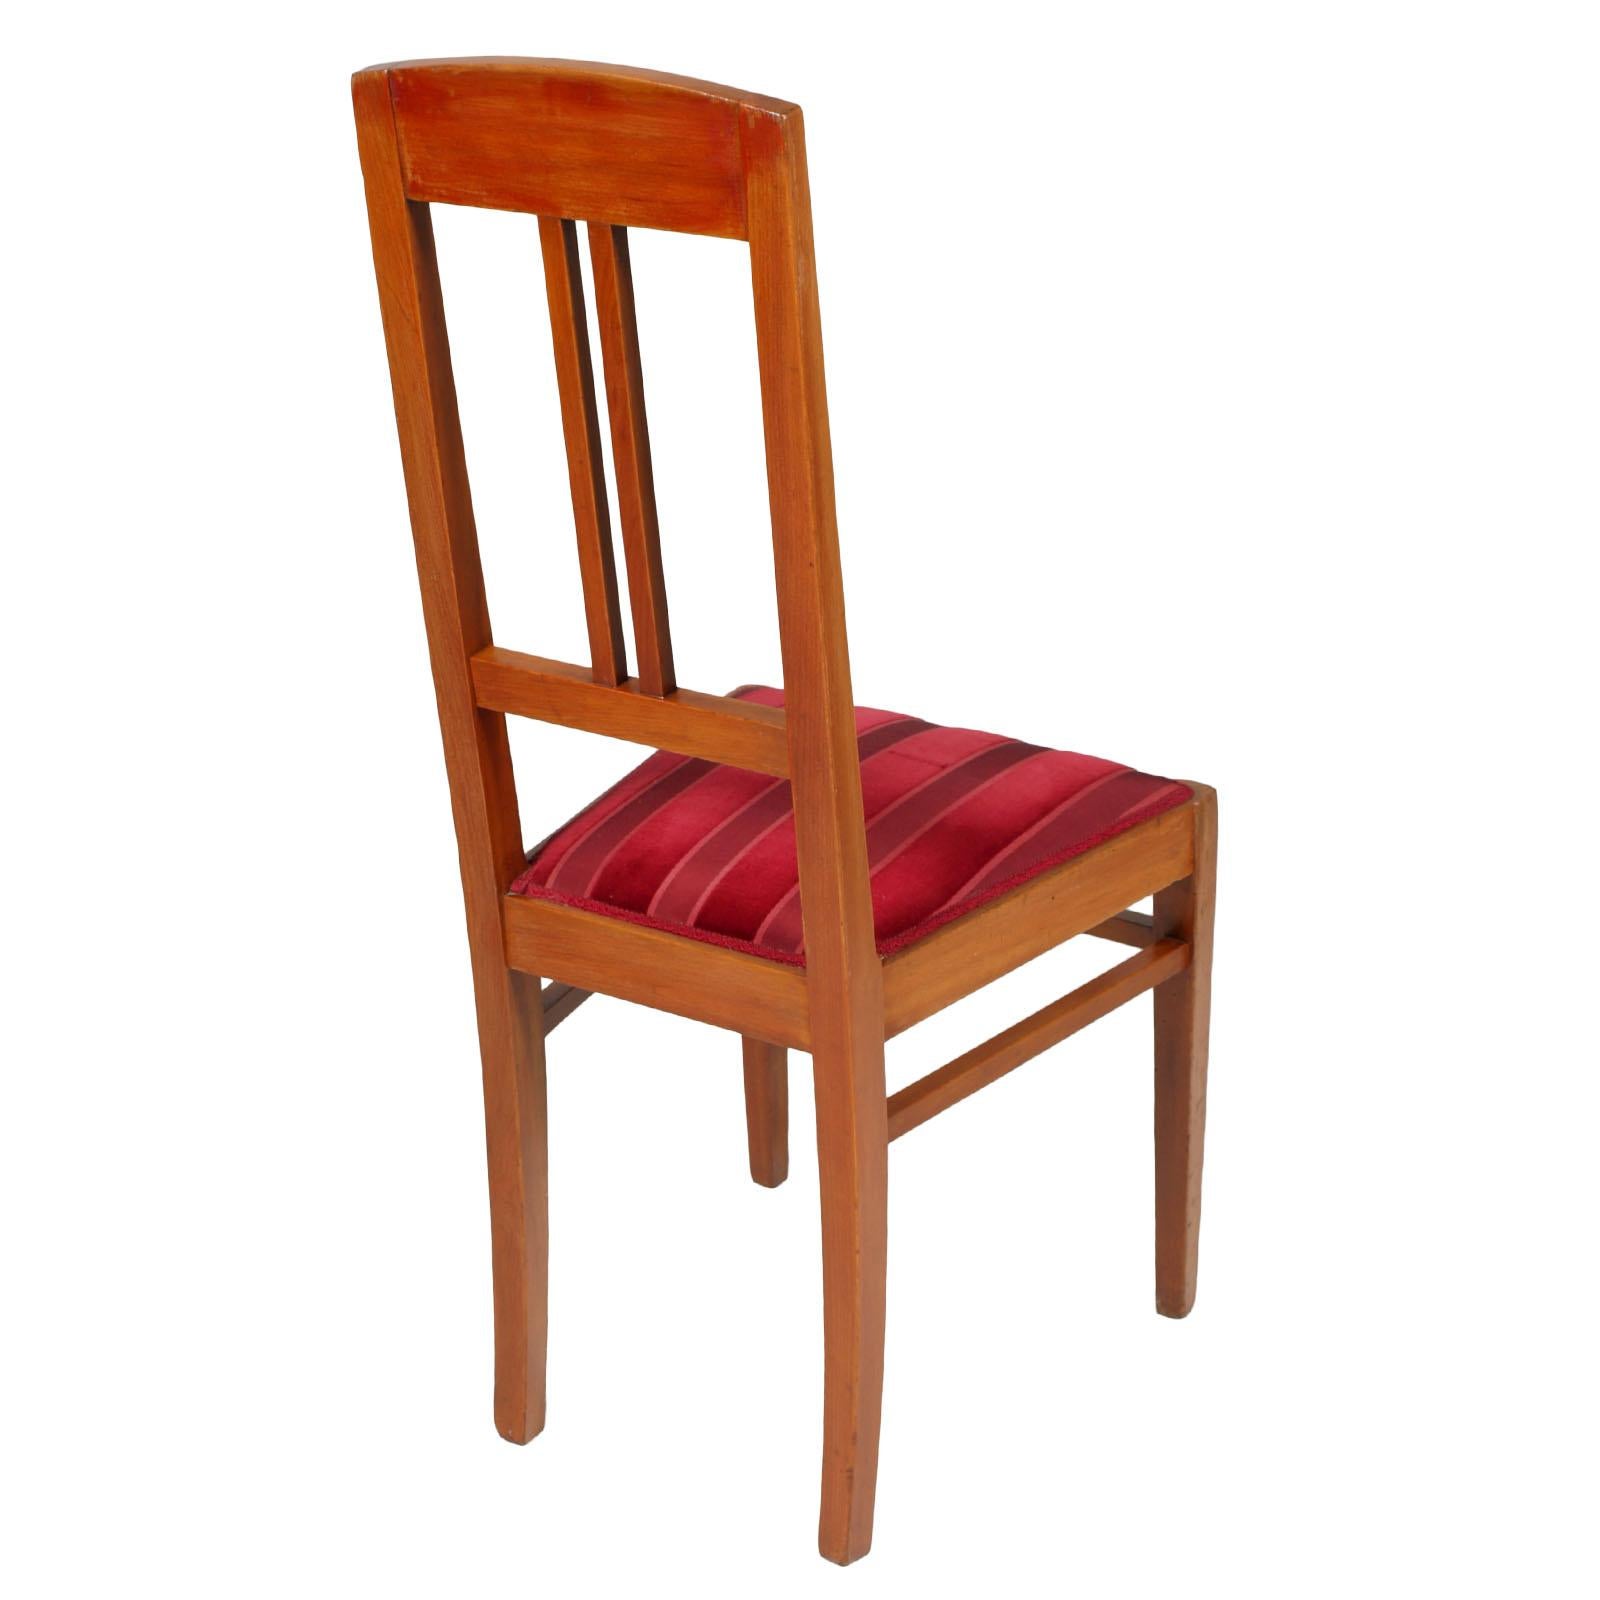 Italian Art Nouveau Side Chairs with Stool, Blond Walnut, Wax-Polished For Sale 2